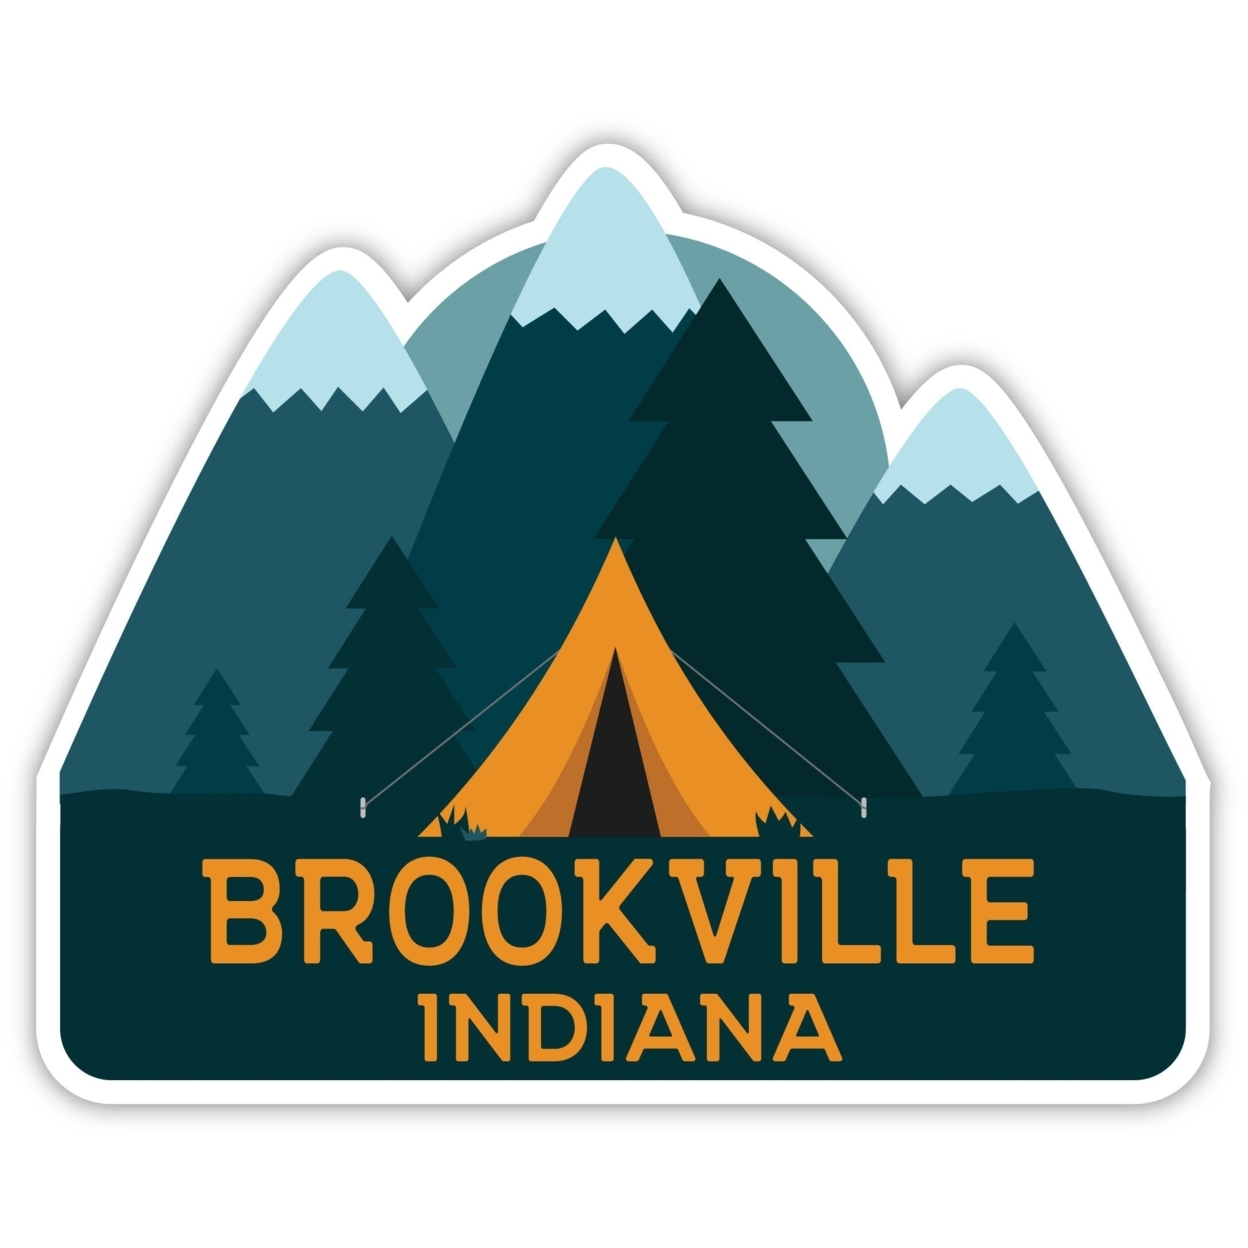 Brookville Indiana Souvenir Decorative Stickers (Choose Theme And Size) - Single Unit, 10-Inch, Camp Life